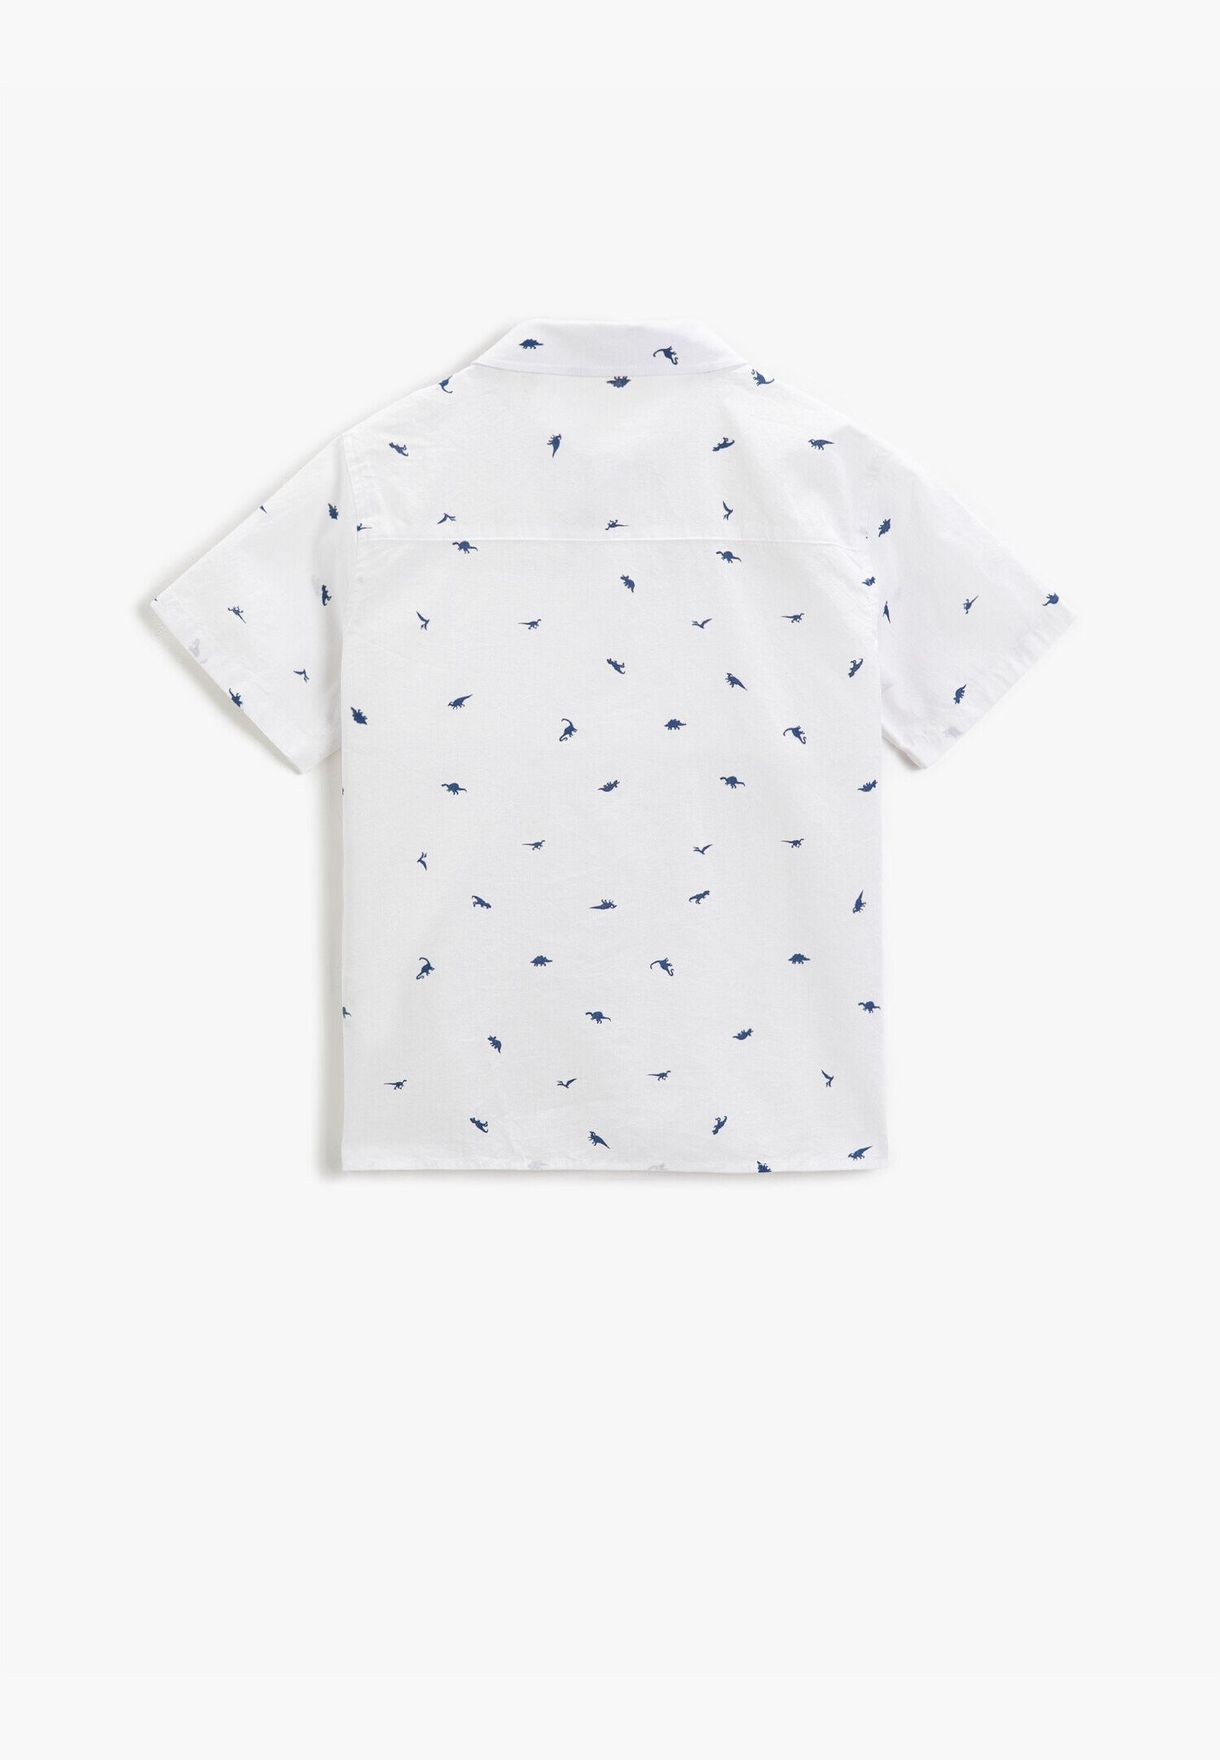 Animal Printed Short Sleeve Shirt Oversize Cotton